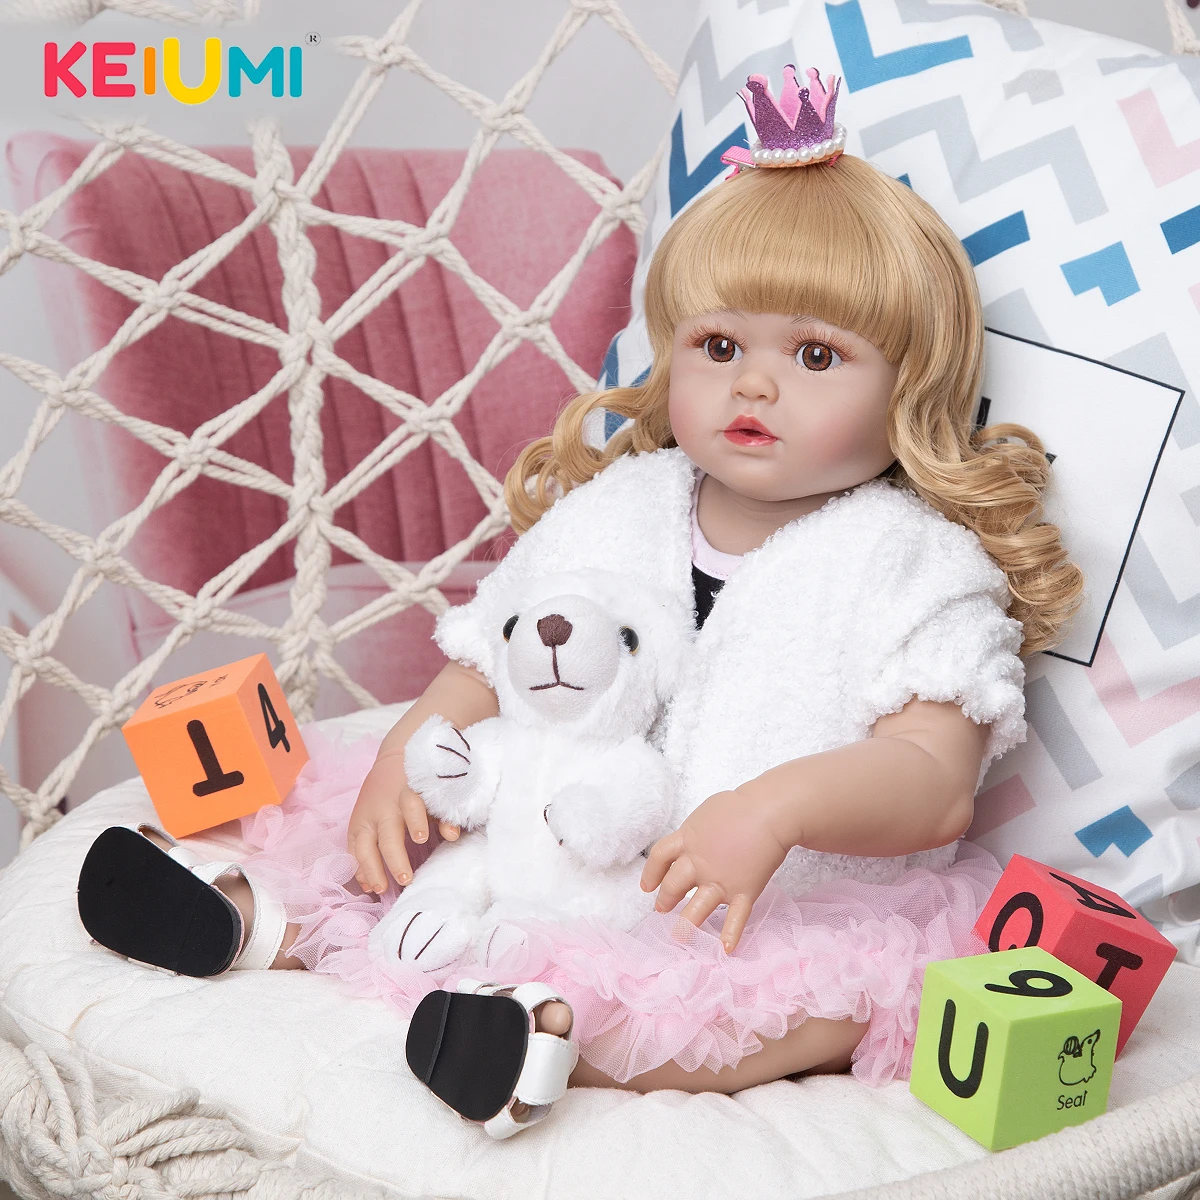 KEIUMI Reborn Dolls Full Vinyl Body 57cm Lifelike Fashion Princess Baby Doll Boneca Reborn Toy For Children's Day Gift 0